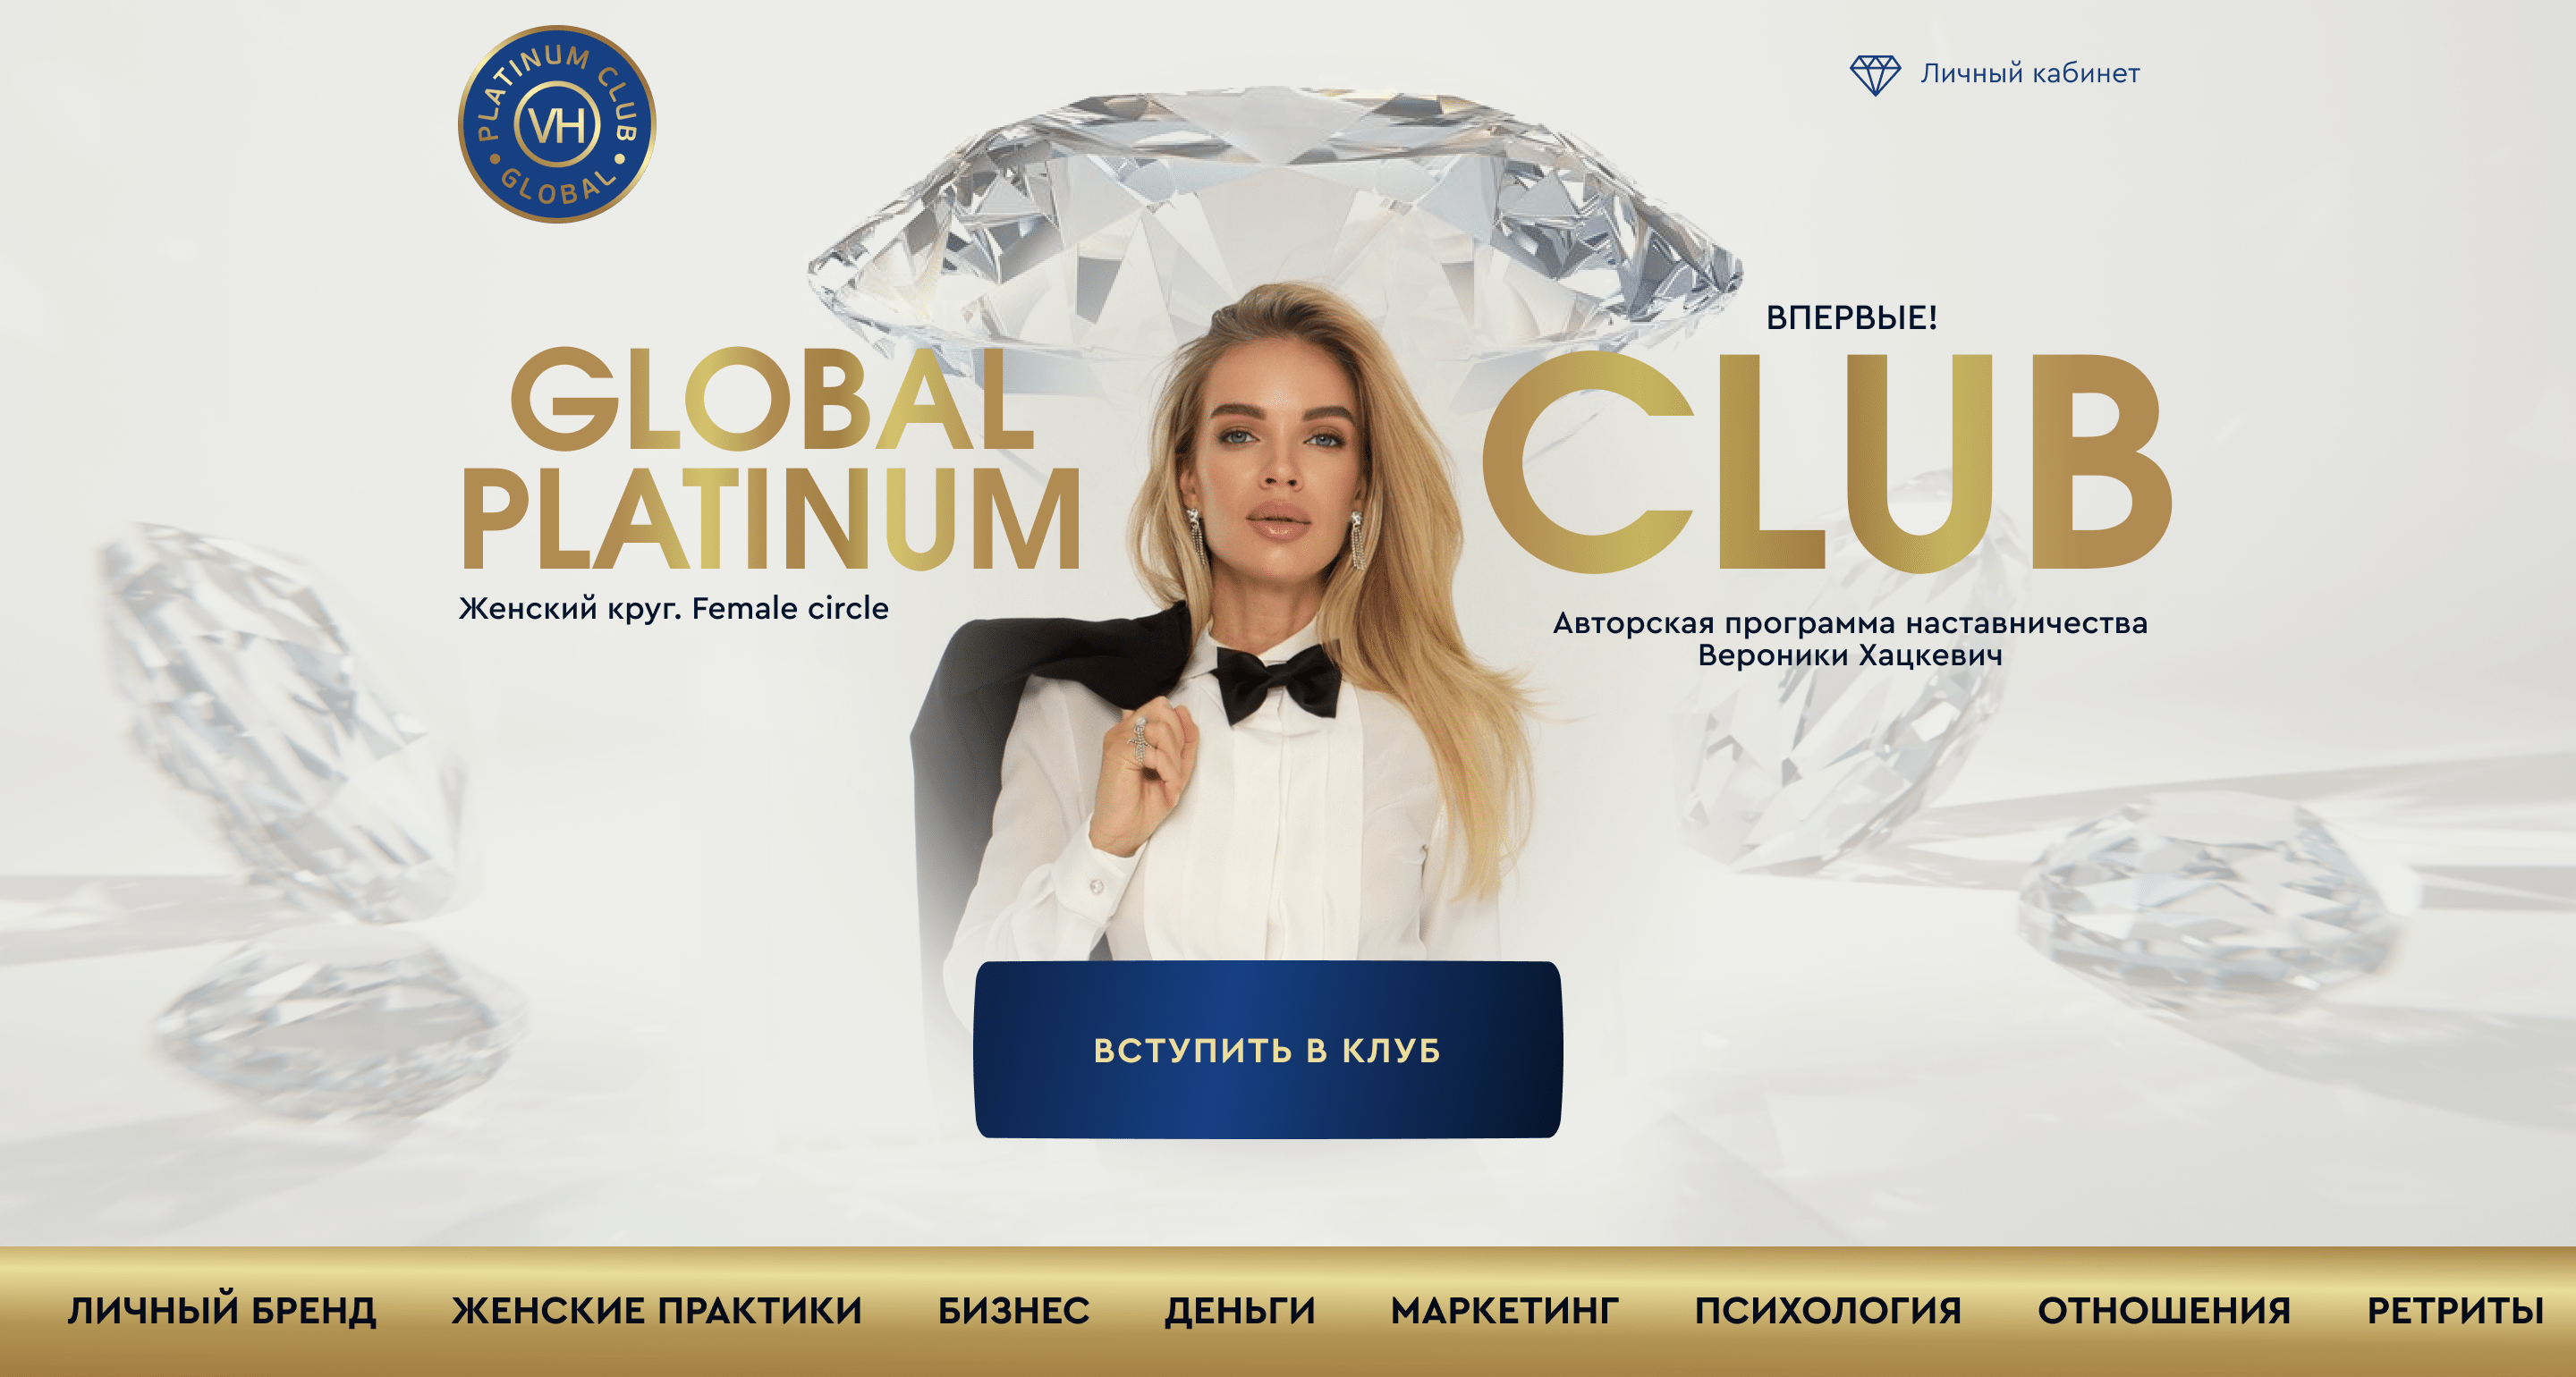 GLOBAL PLATINUM CLUB